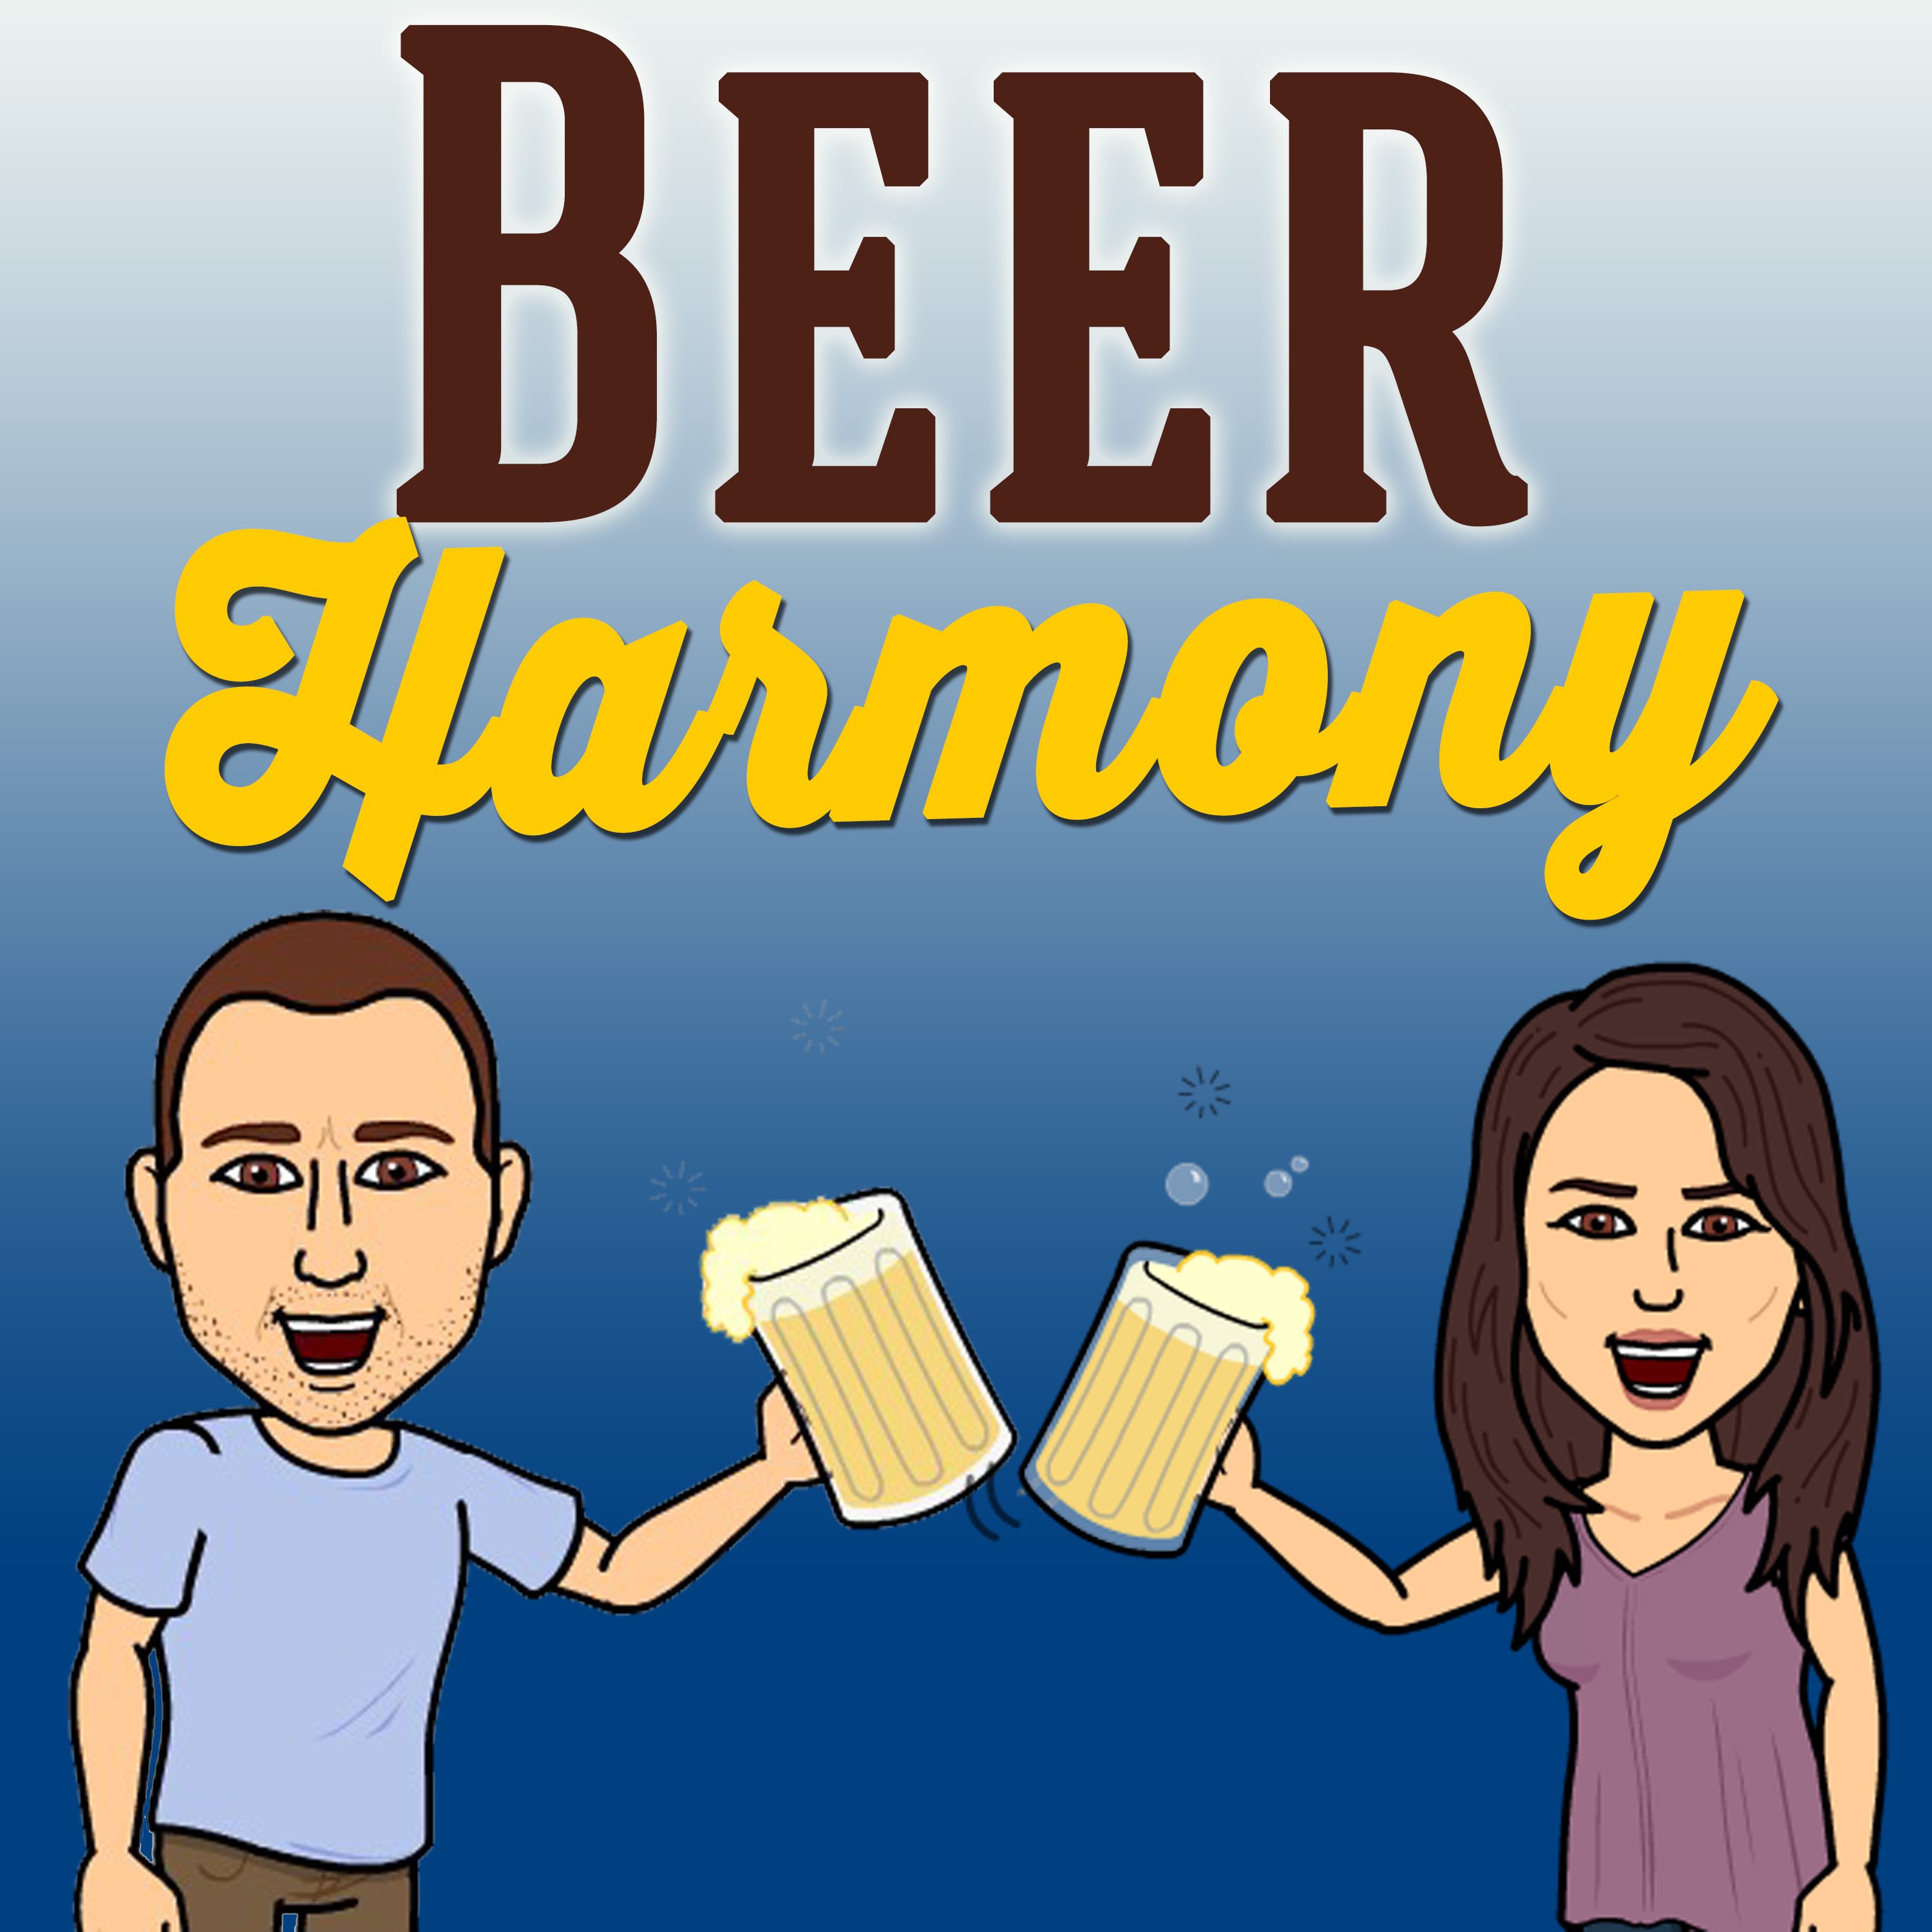 Artwork for Beer Harmony